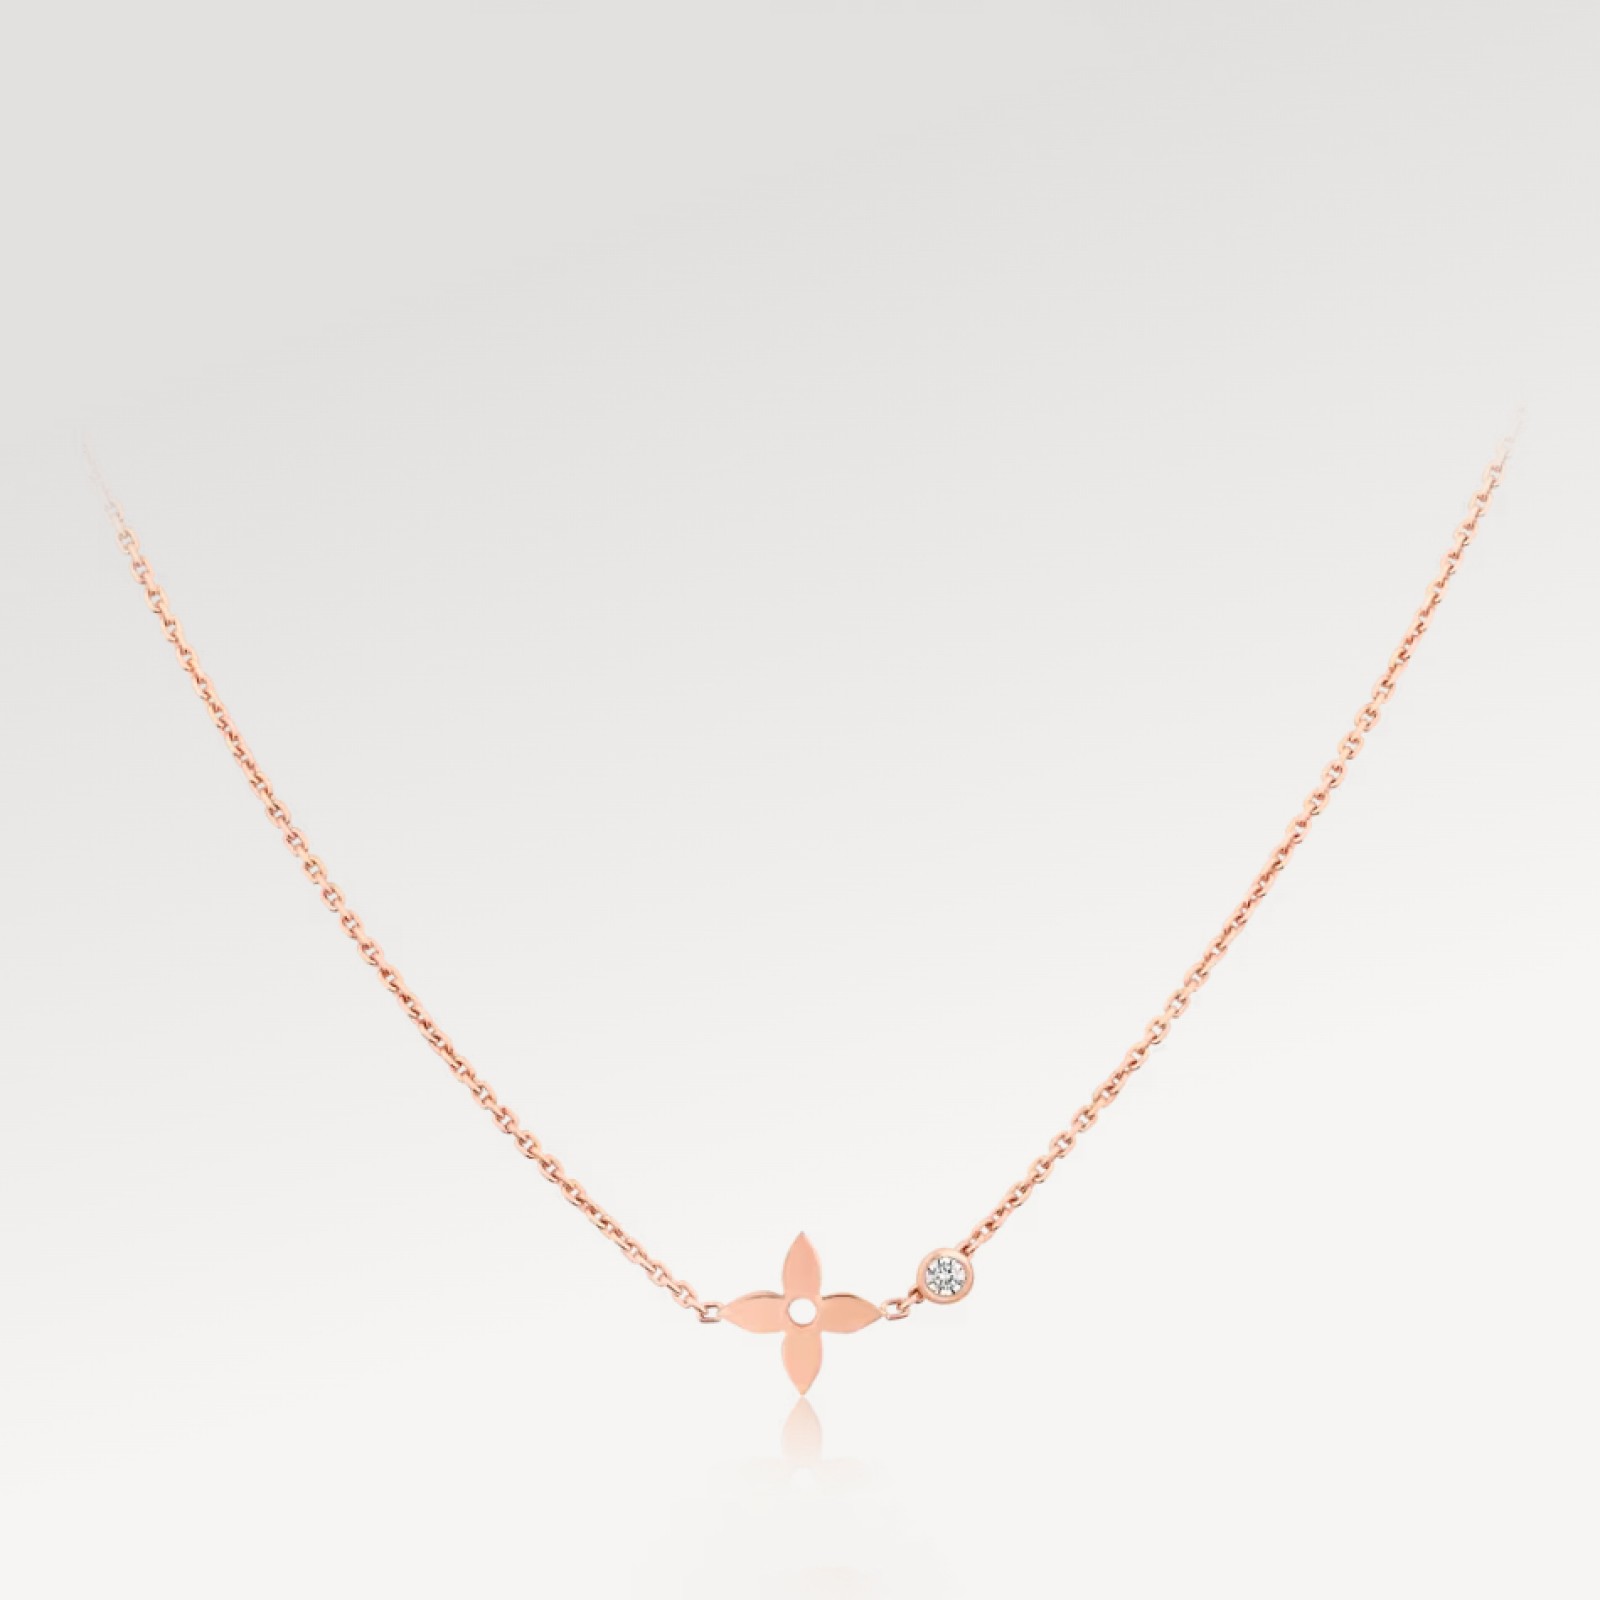 Idylle Blossom pendant, pink gold and diamond